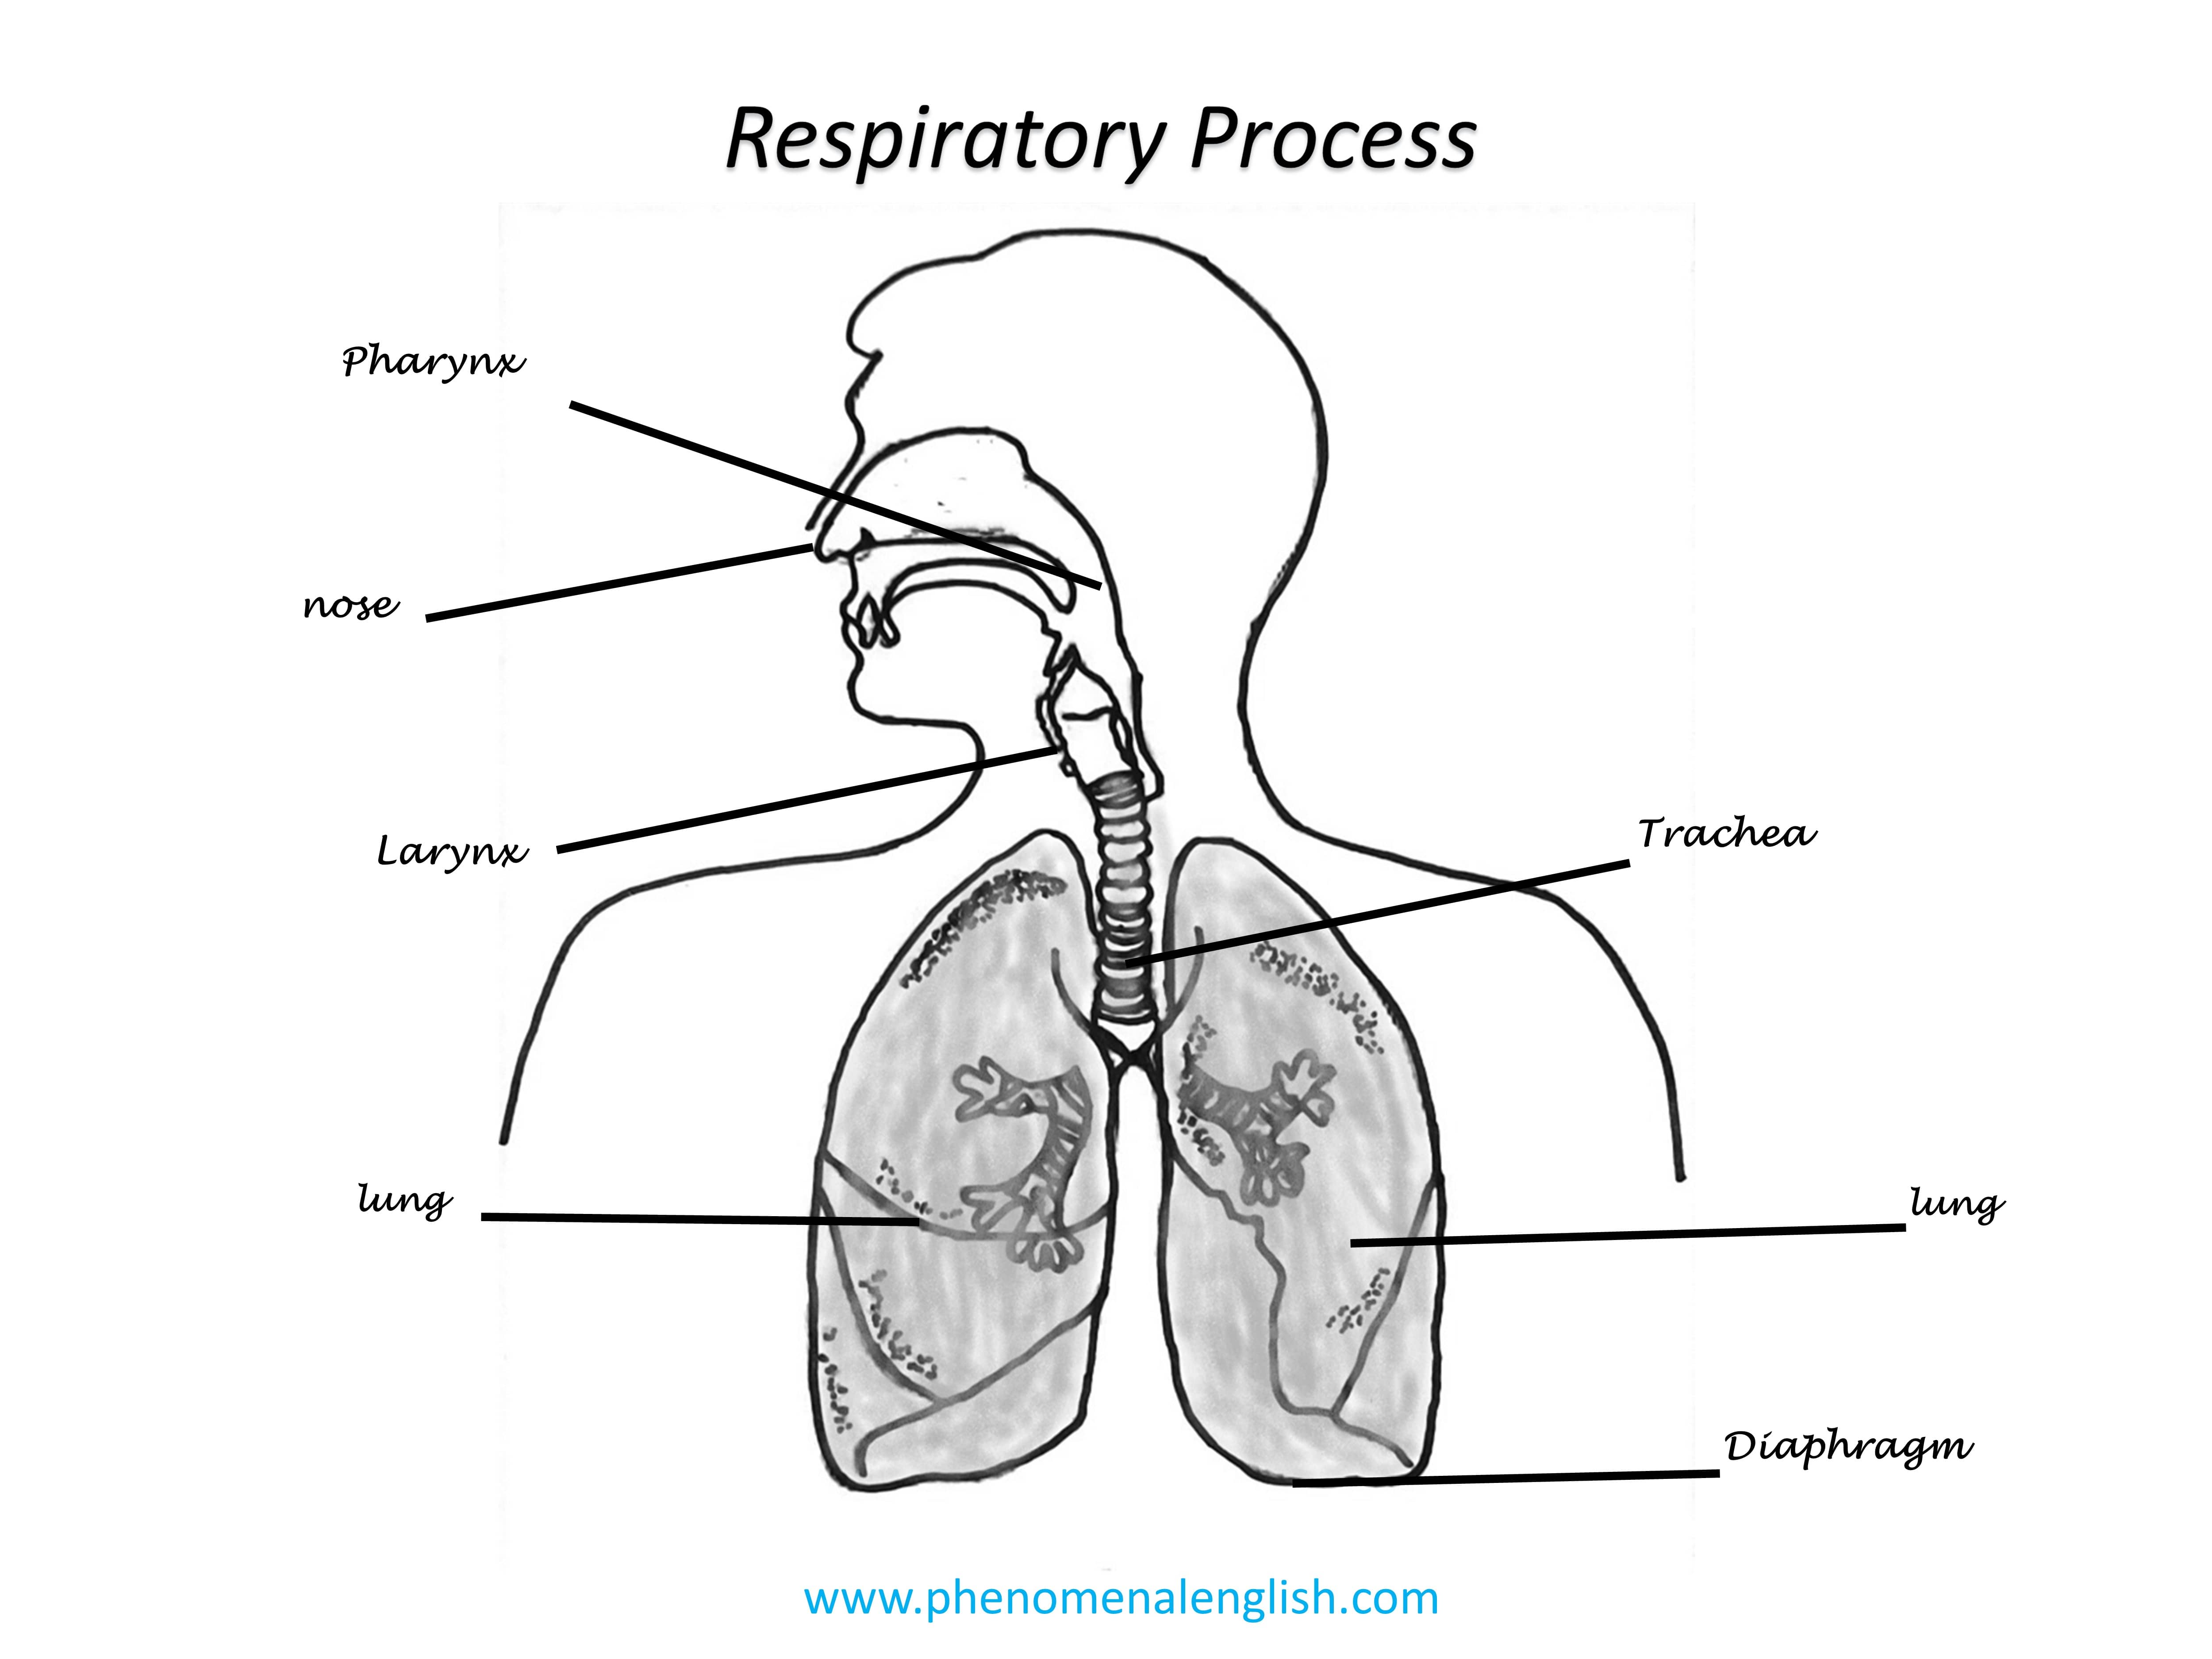 Respiratory process